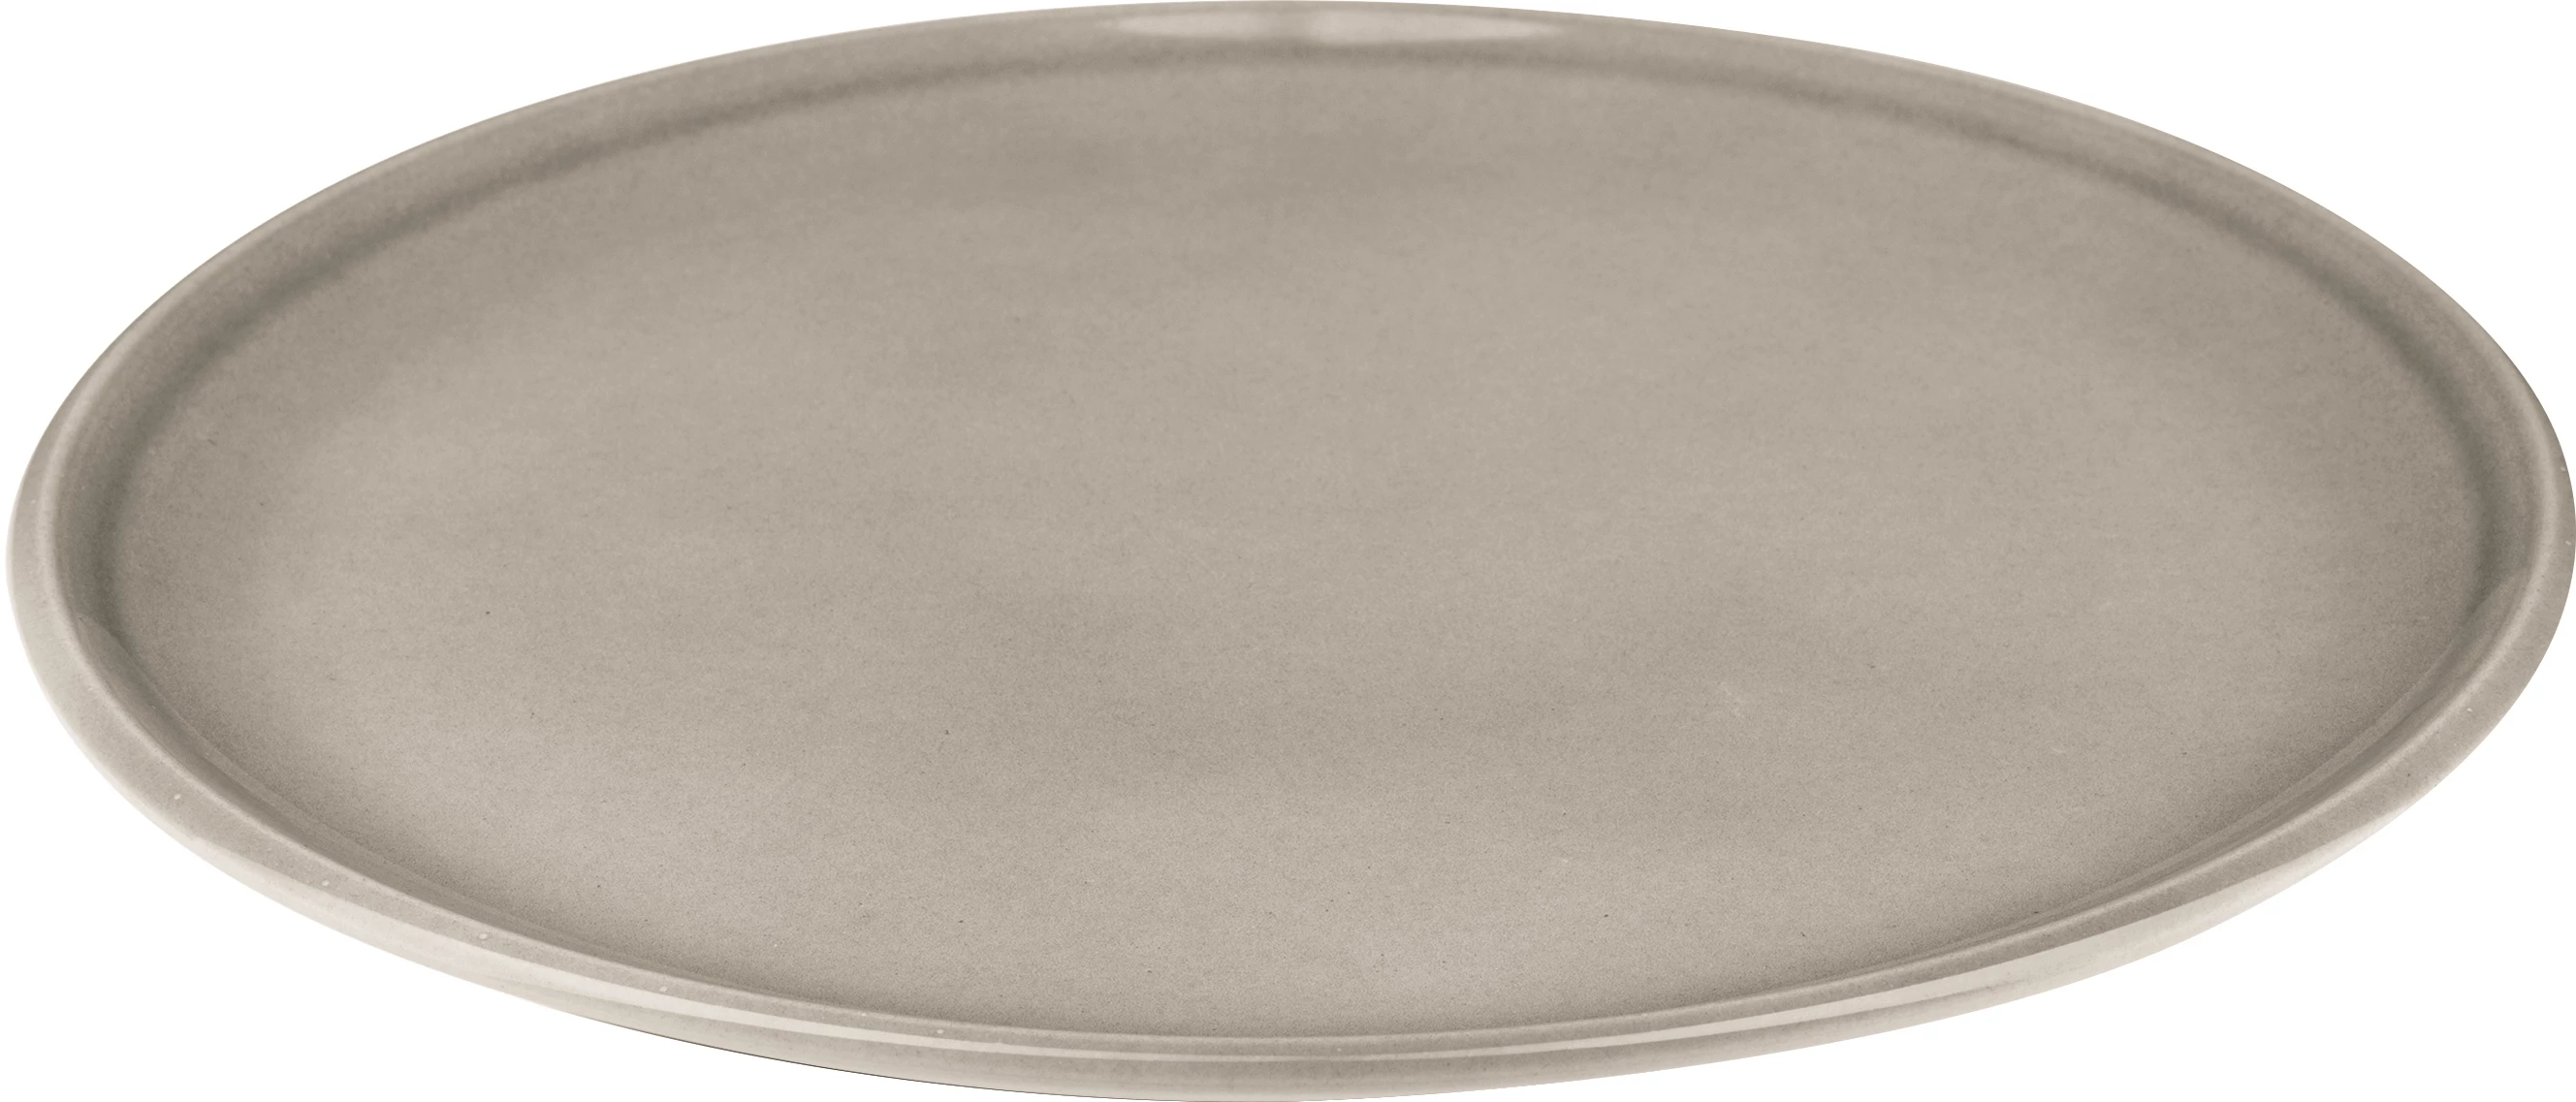 Figgjo Pax flad tallerken, grå, ø26 cm